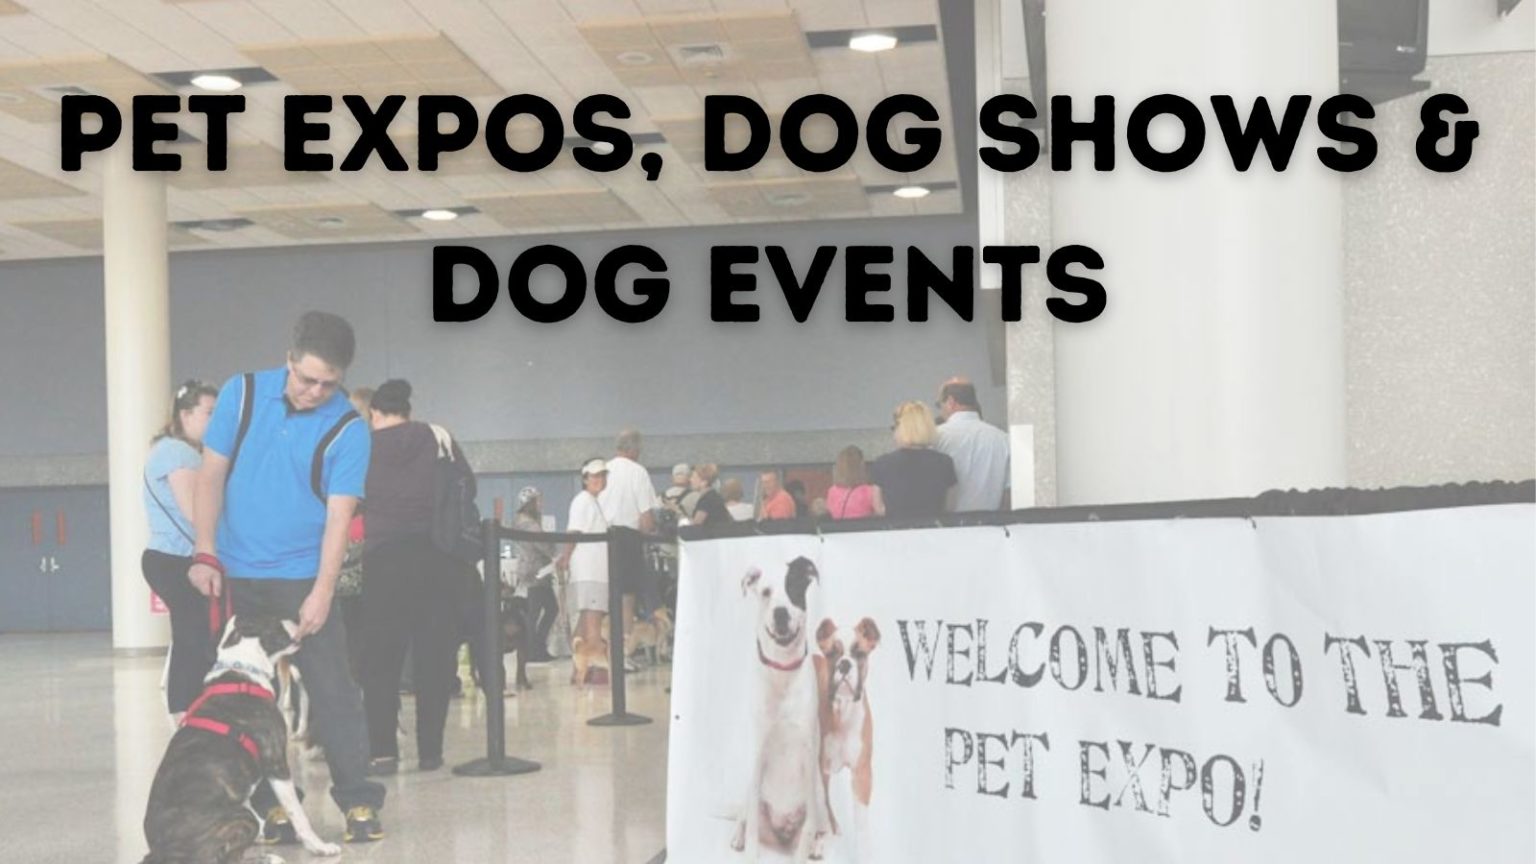 Pet Expos Dog Shows Dog Events 1536x864 